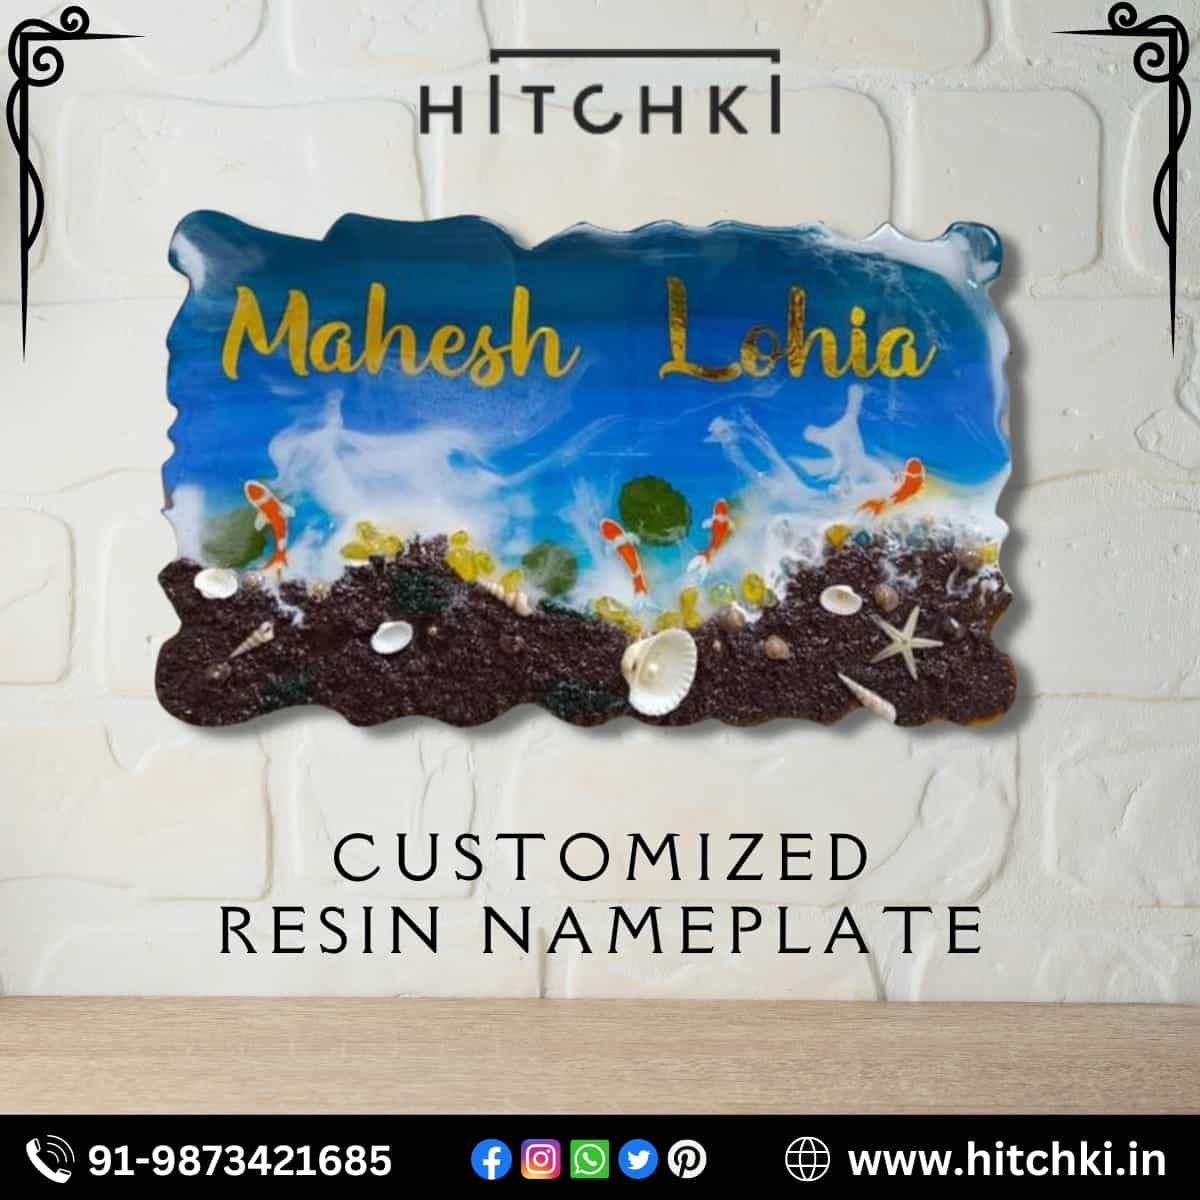 Best Customized Resin Name Plates | Trending Now | HITCHKI